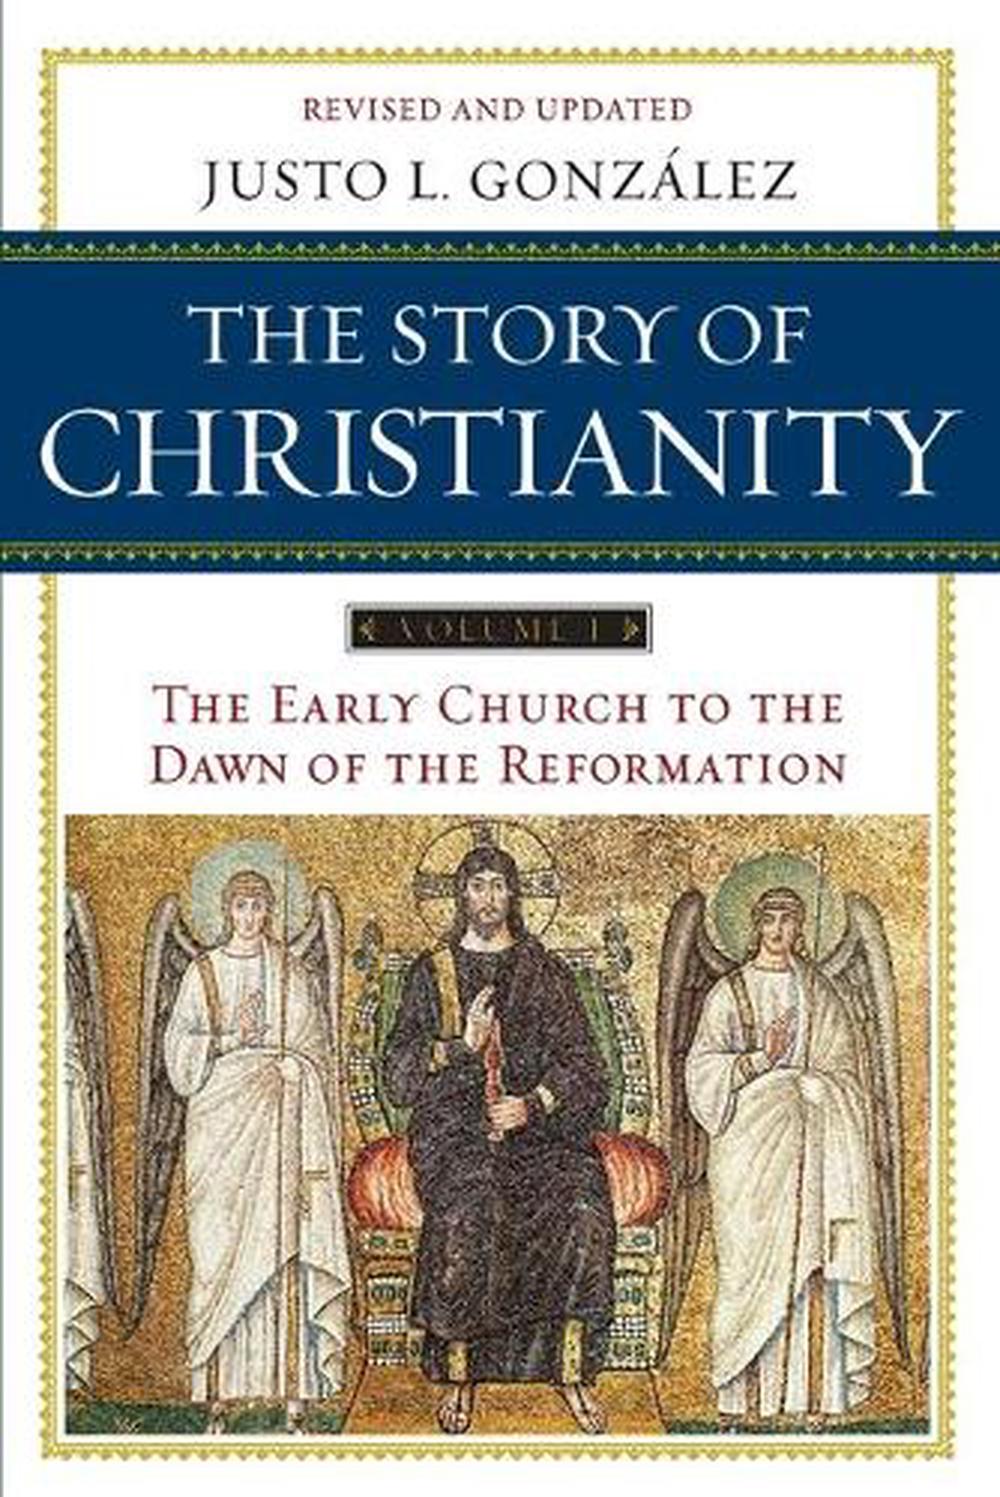 justo gonzalez the story of christianity volume 2